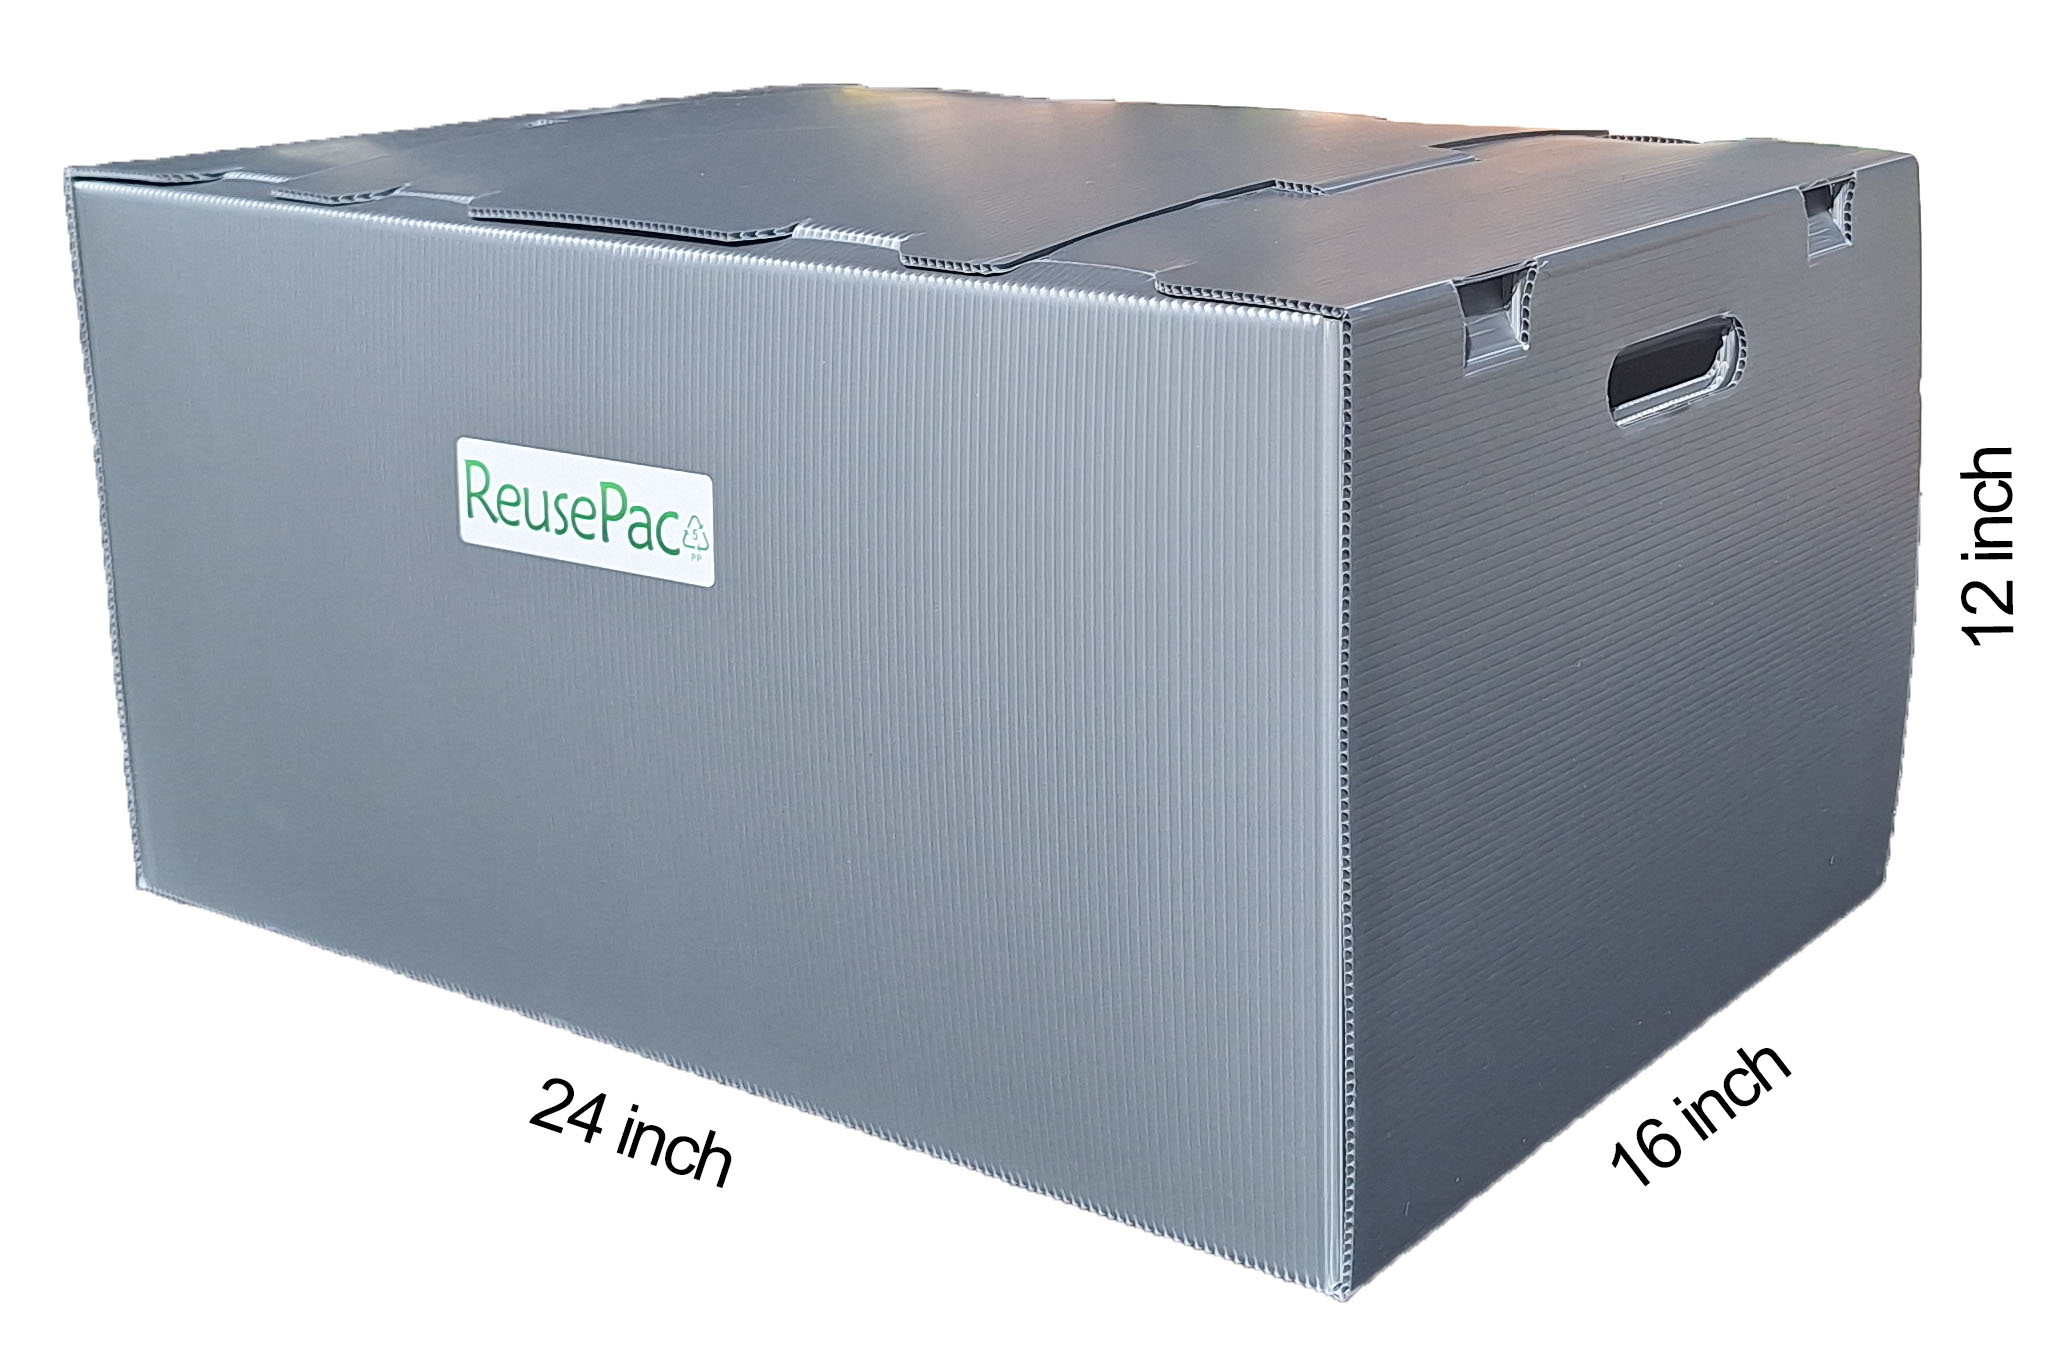 Reusable box gray 24x16x12 inch moving & storage